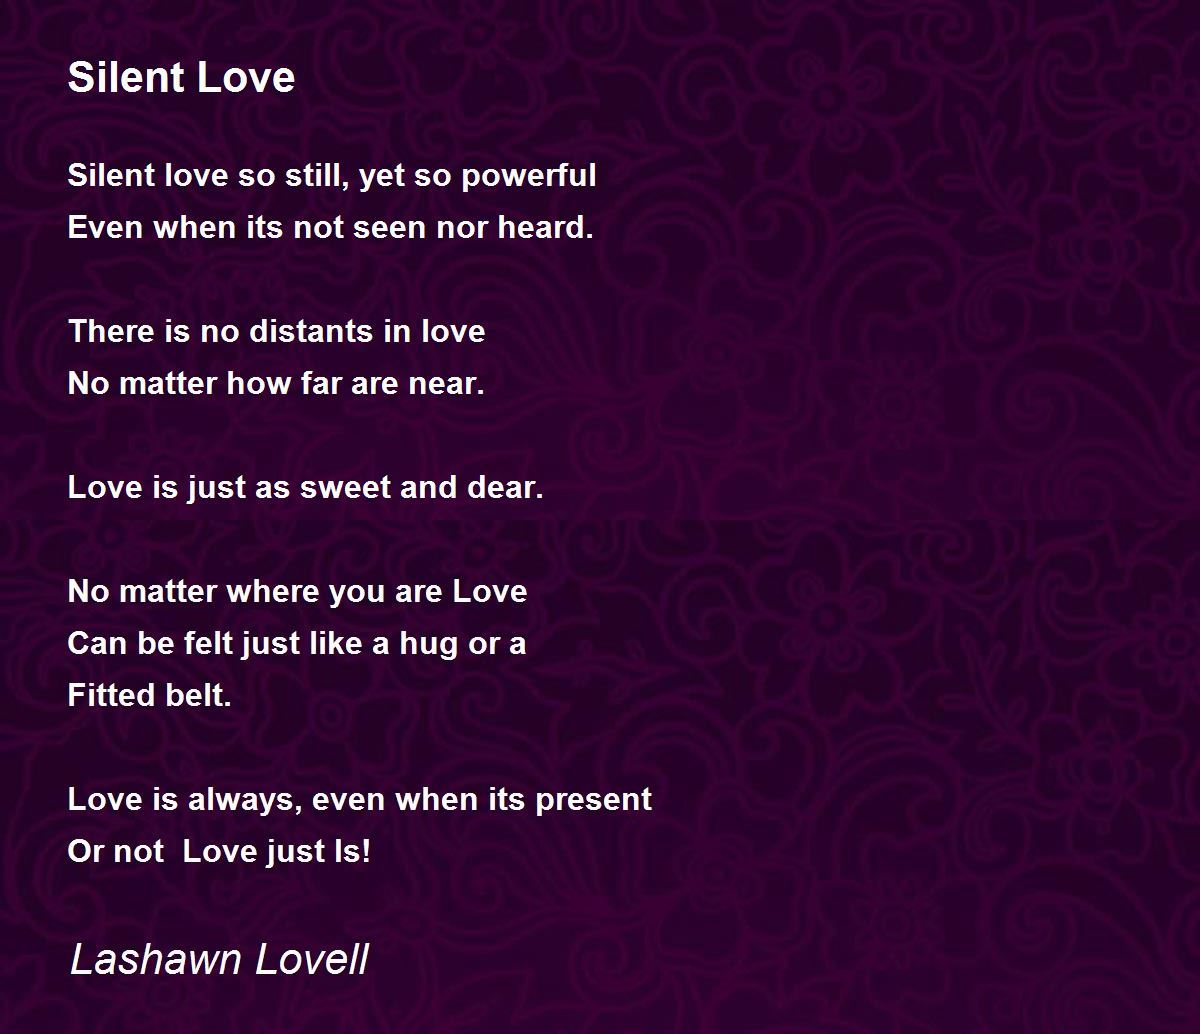 Silent Love - Silent Love Poem by Lashawn Lovell